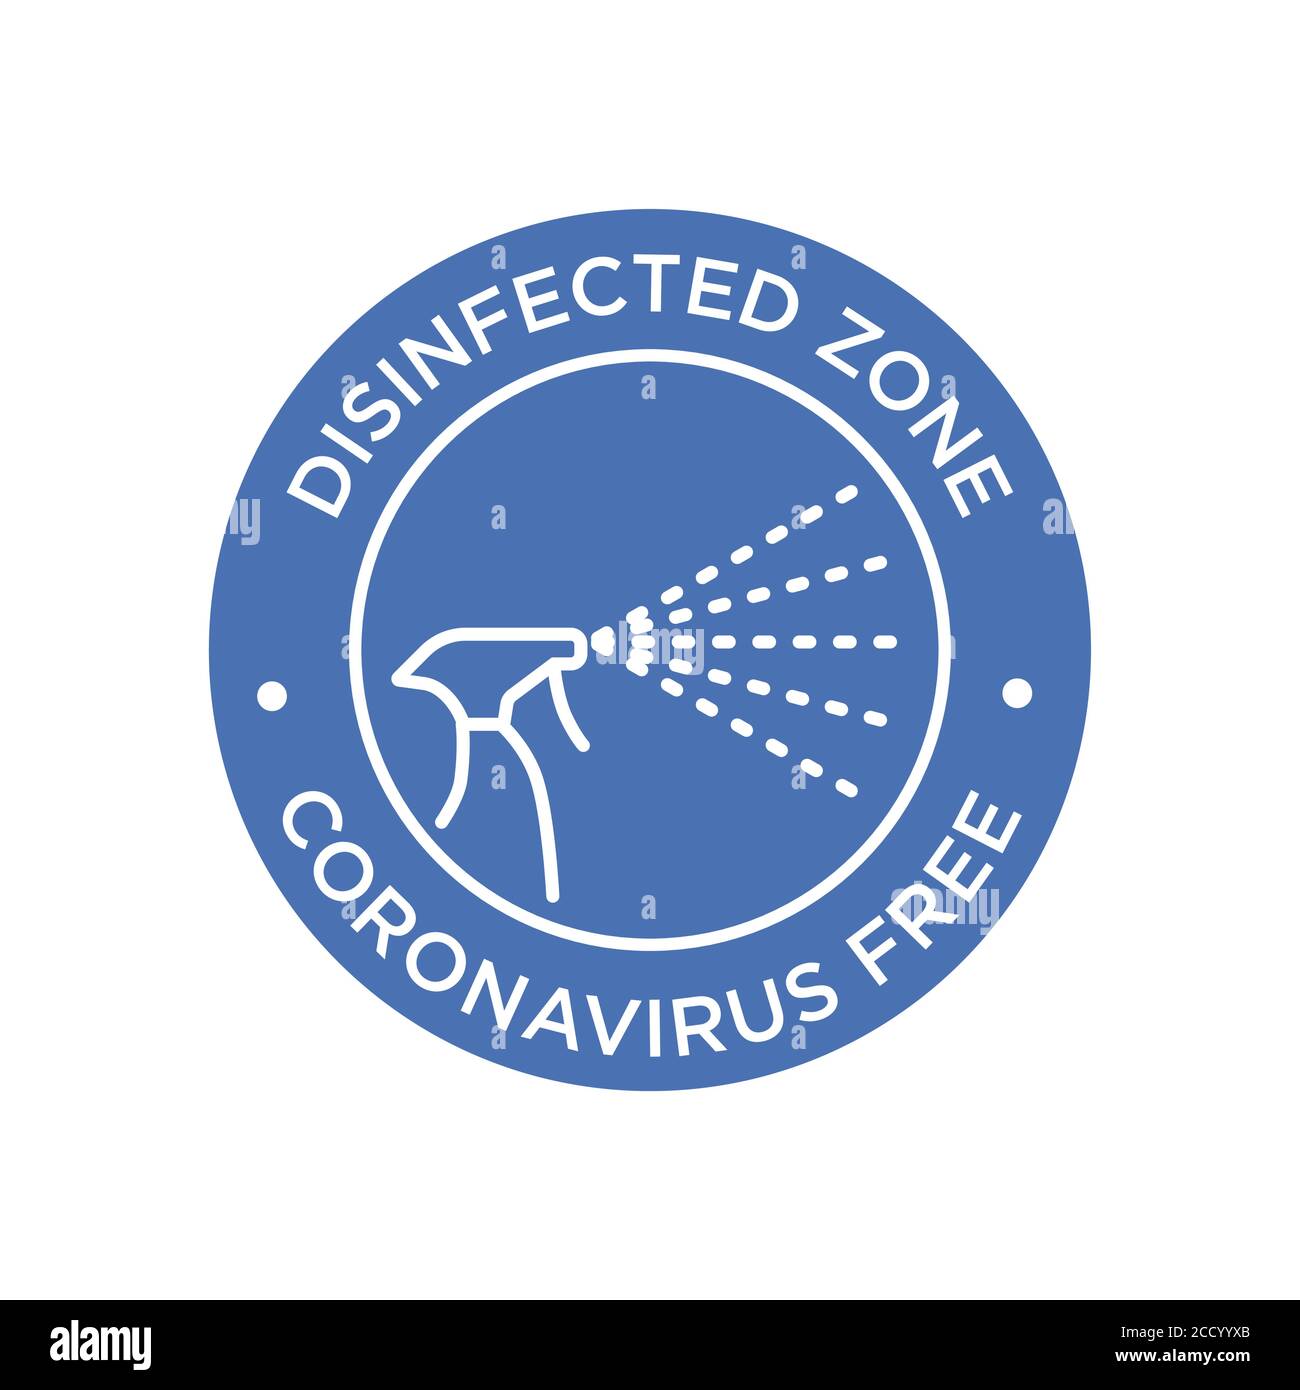 Covid-19 free zone icon. Round symbol for disinfected areas of Coronavirus. Stock Vector